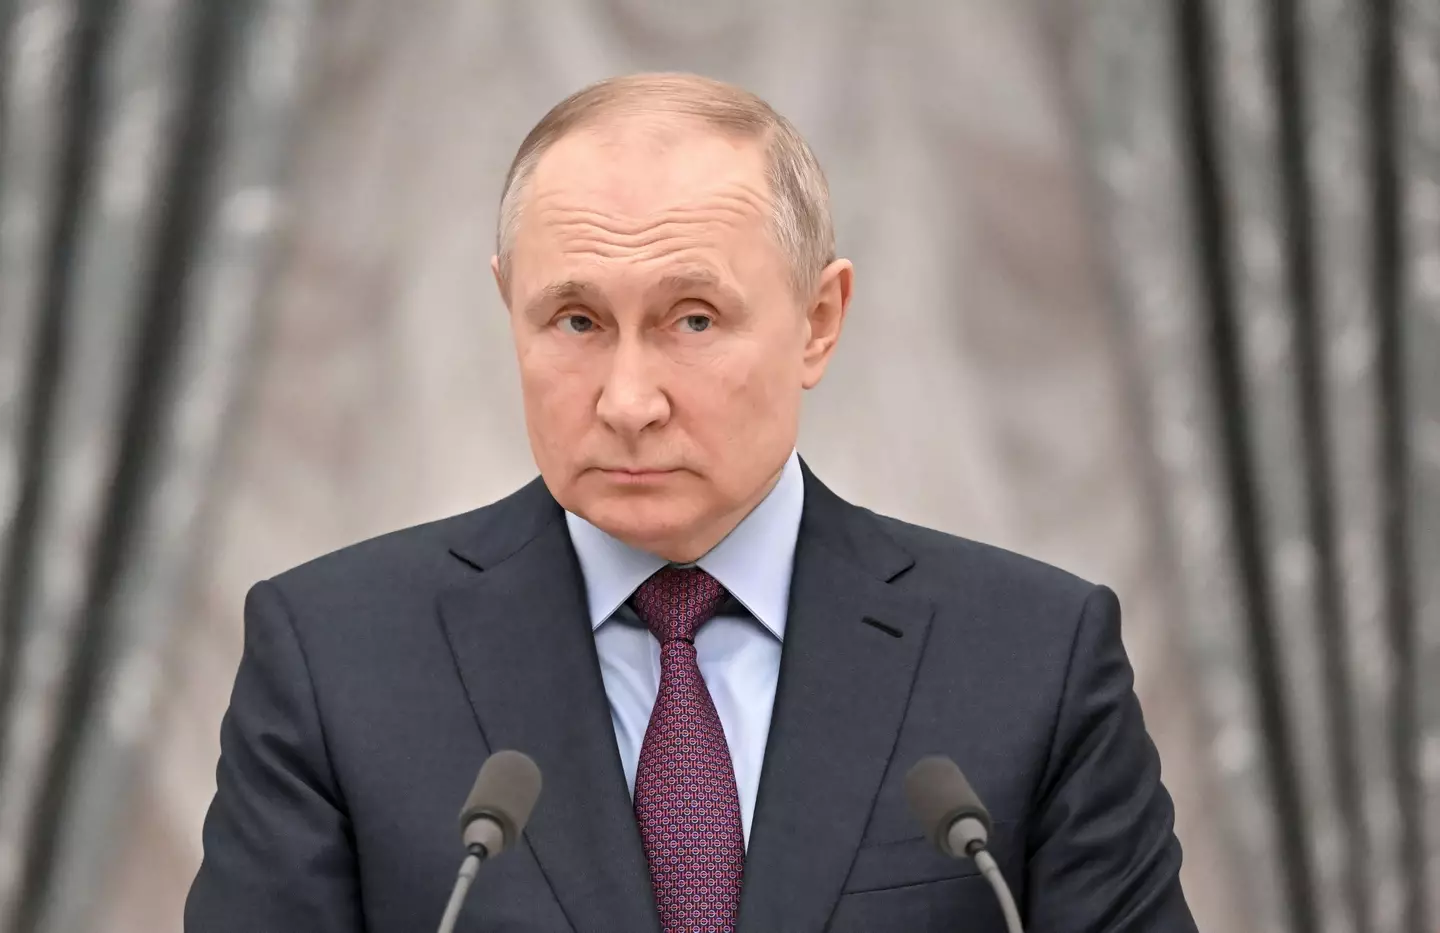 US President Joe Biden has branded Putin a 'war criminal'.